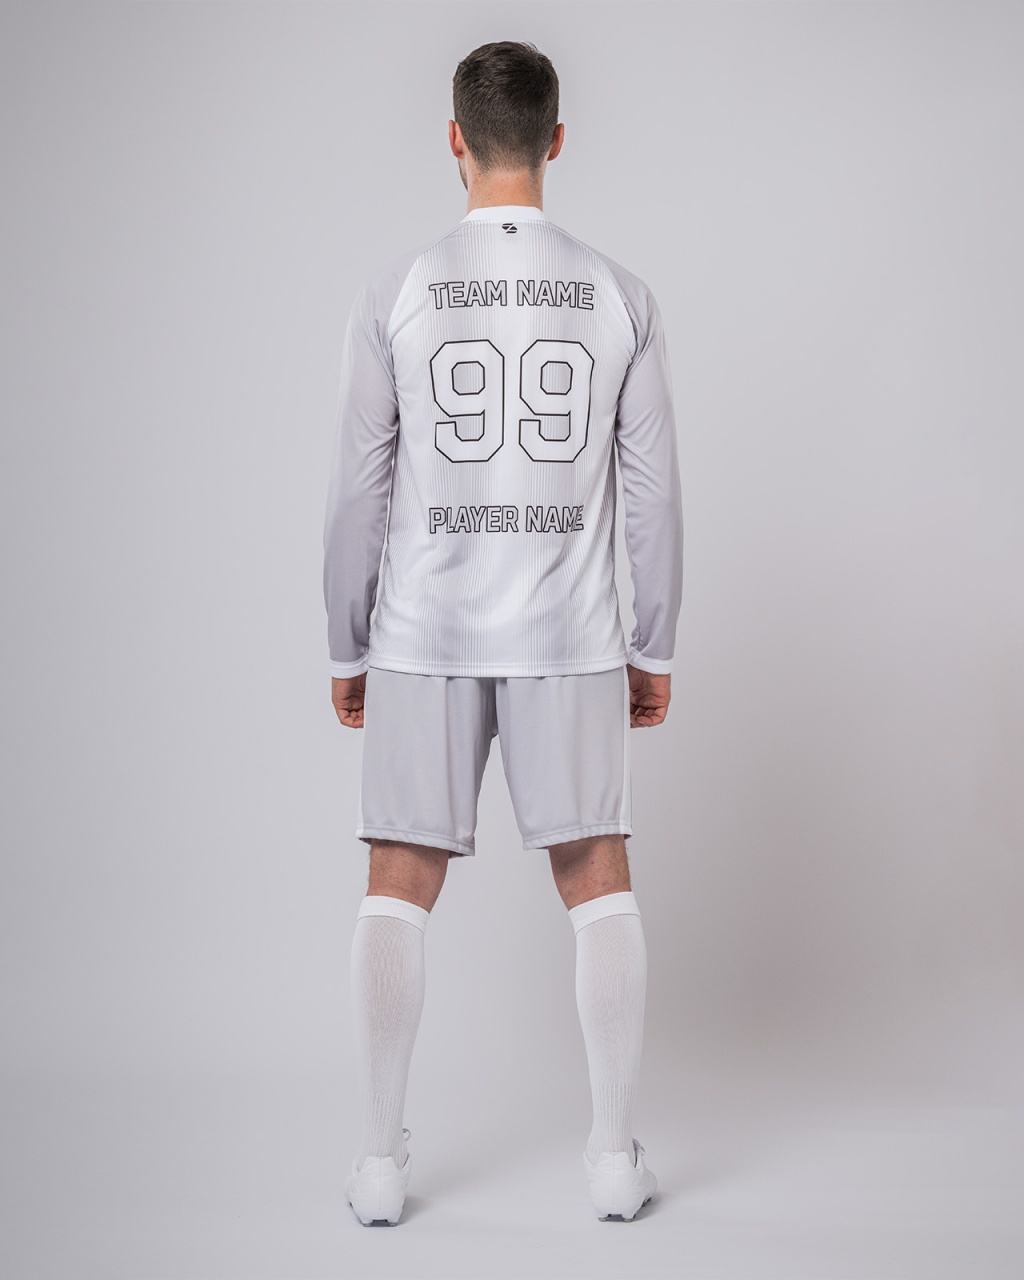 Rio men’s long-sleeved football jersey